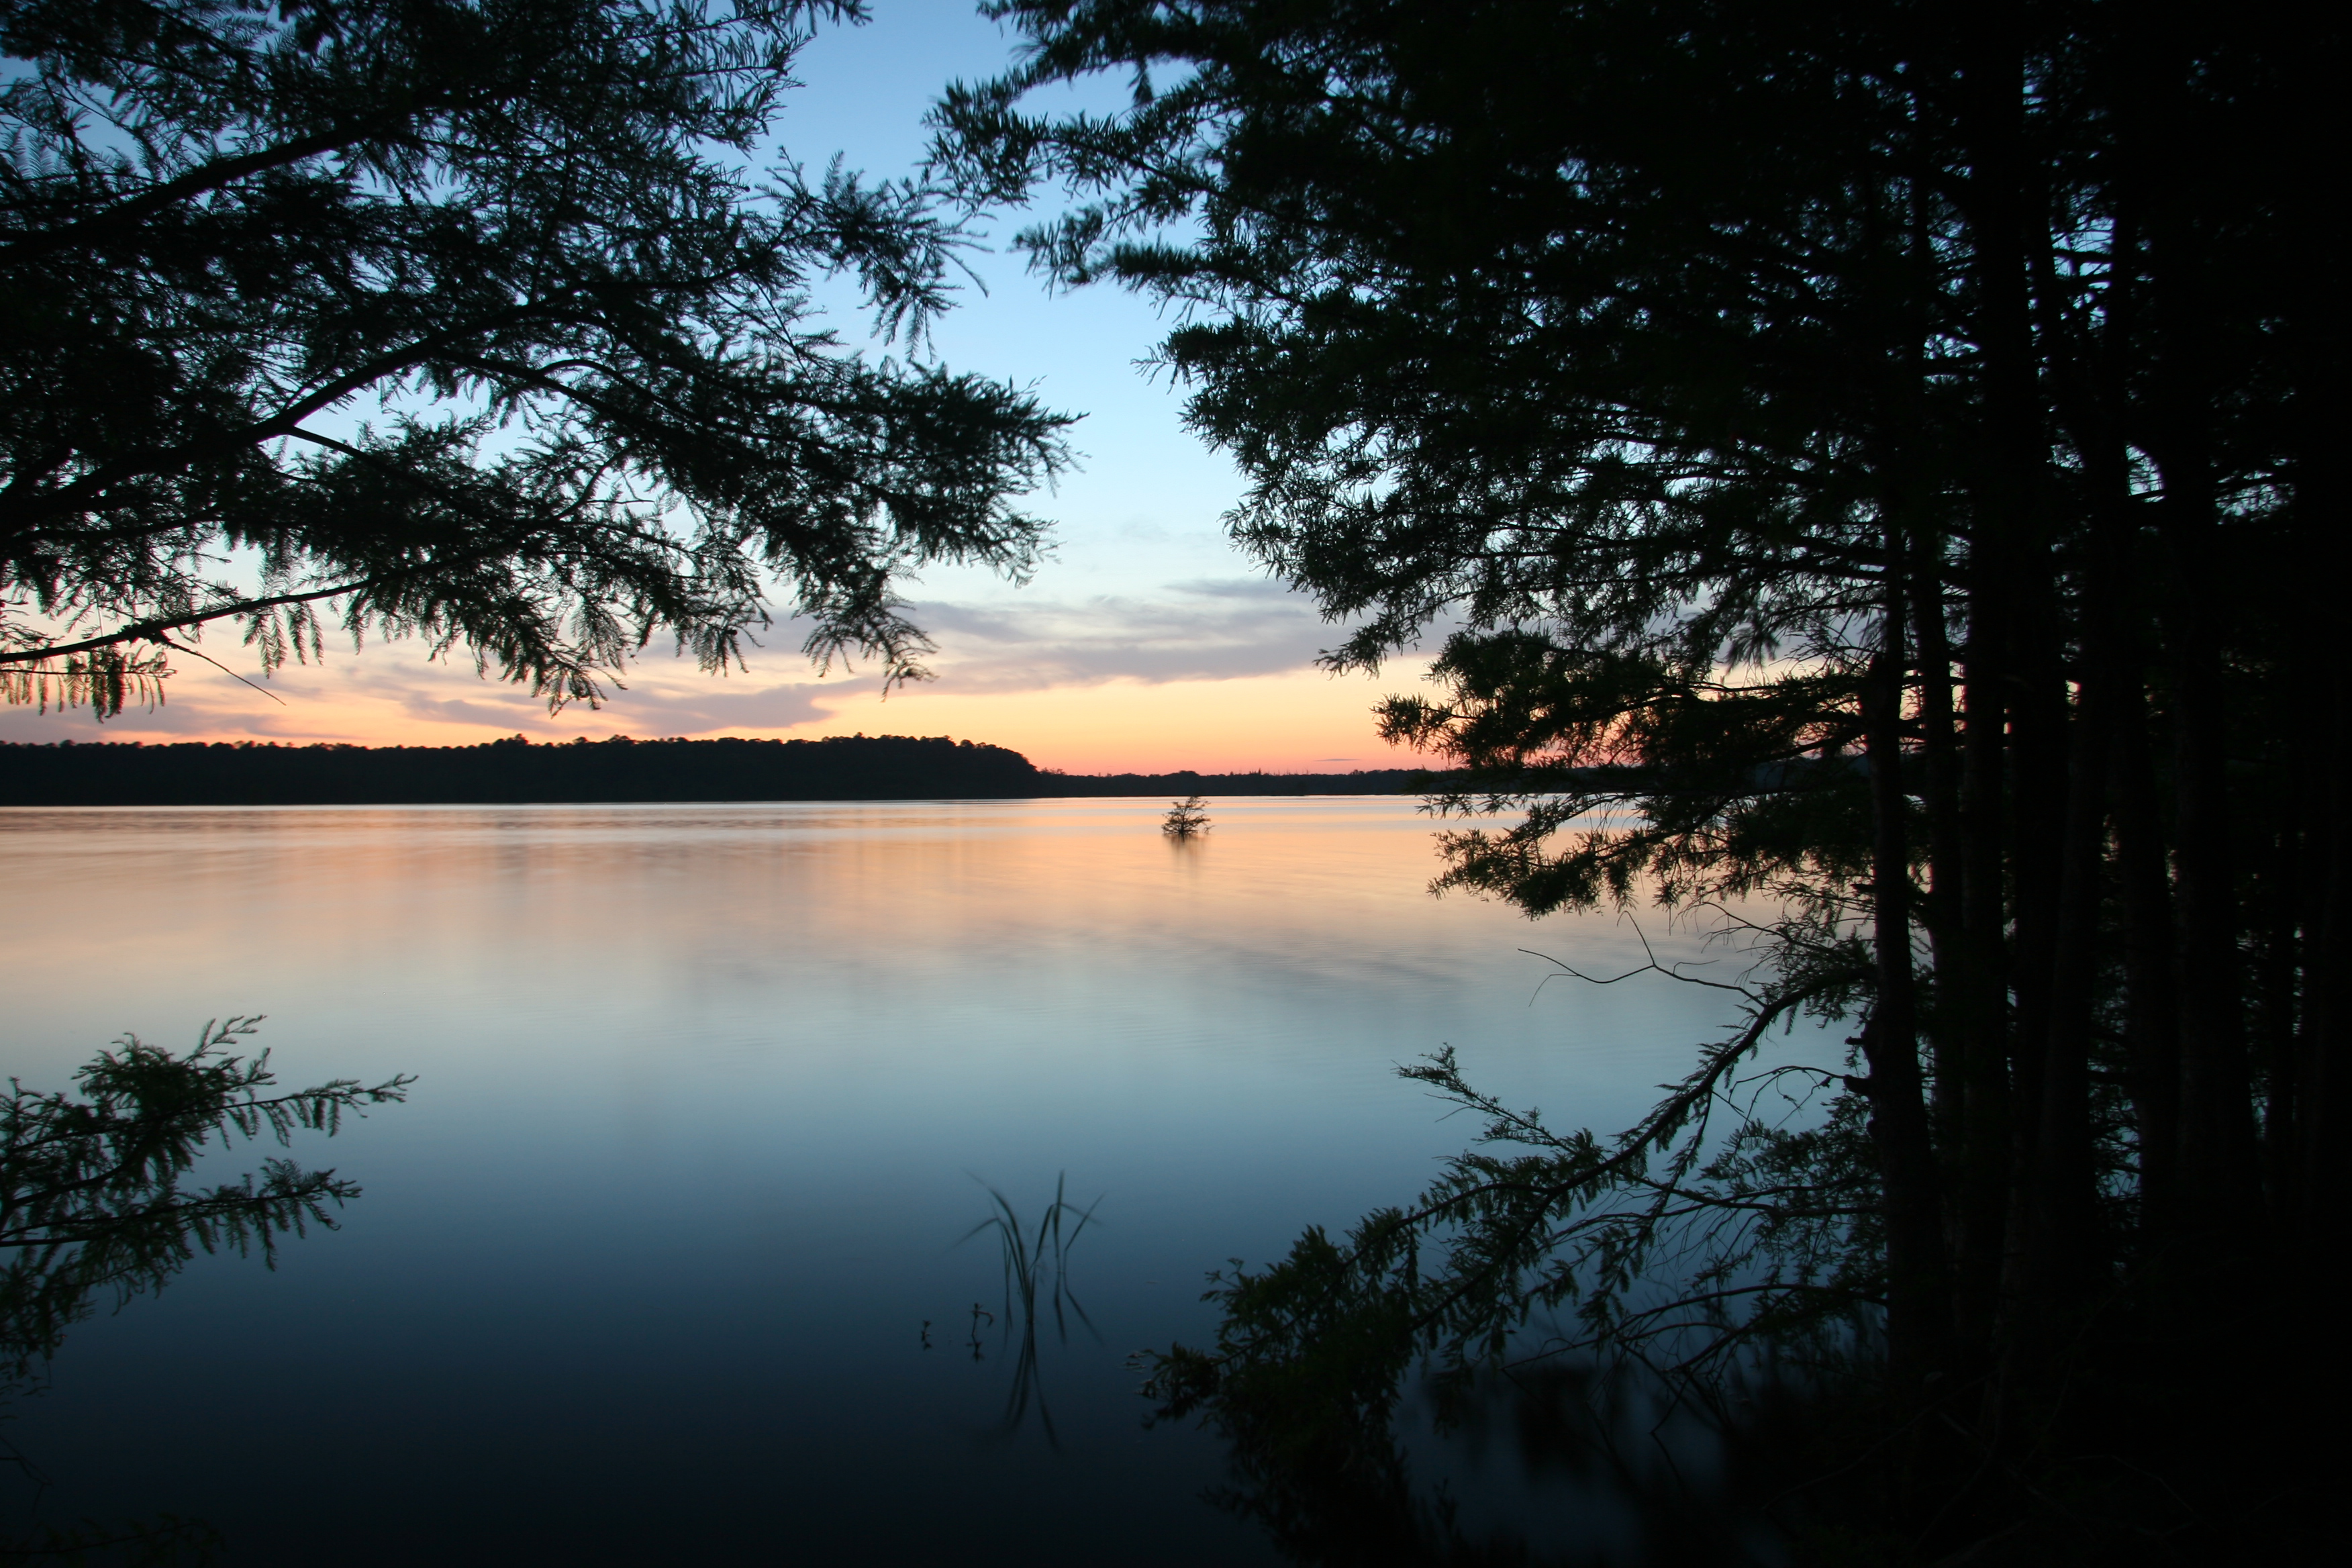 An image of a lake at sunset.